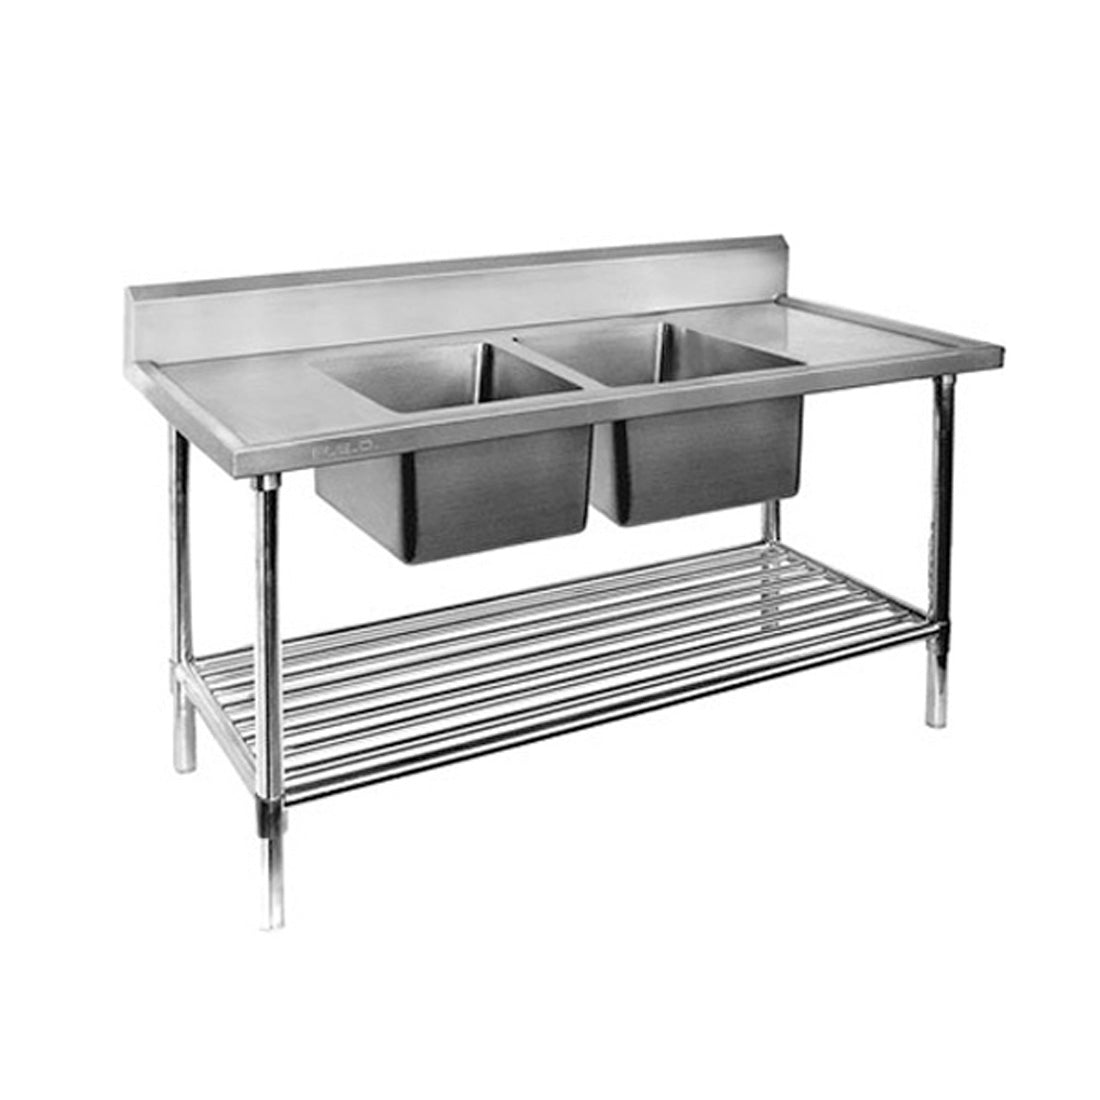 Double Centre Sink Bench with Pot Undershelf DSB7-1200C/A